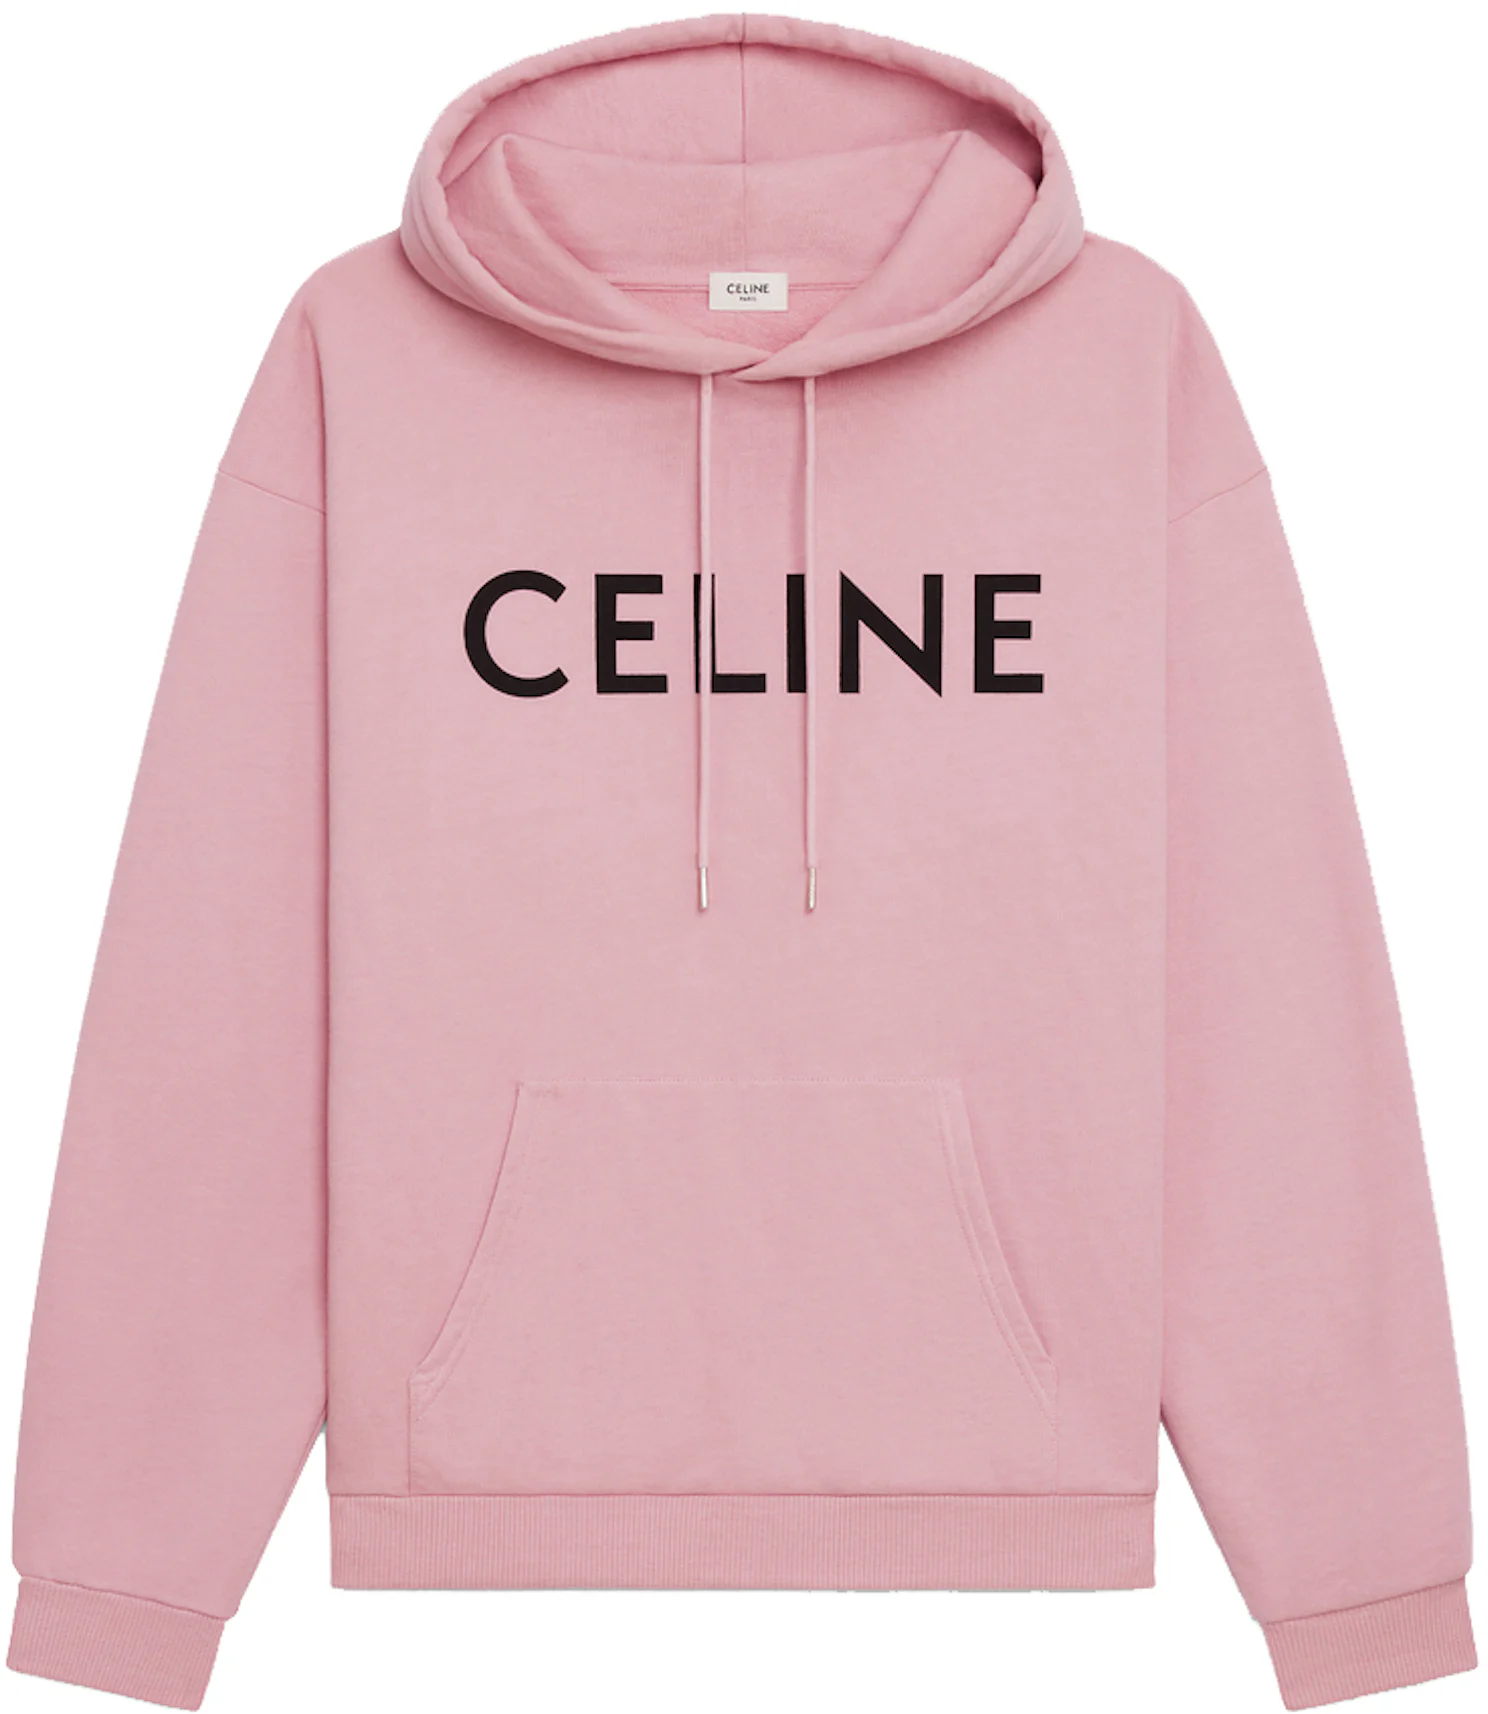 Celine Loose Cotton Sweatshirt with Studs Grey/Black